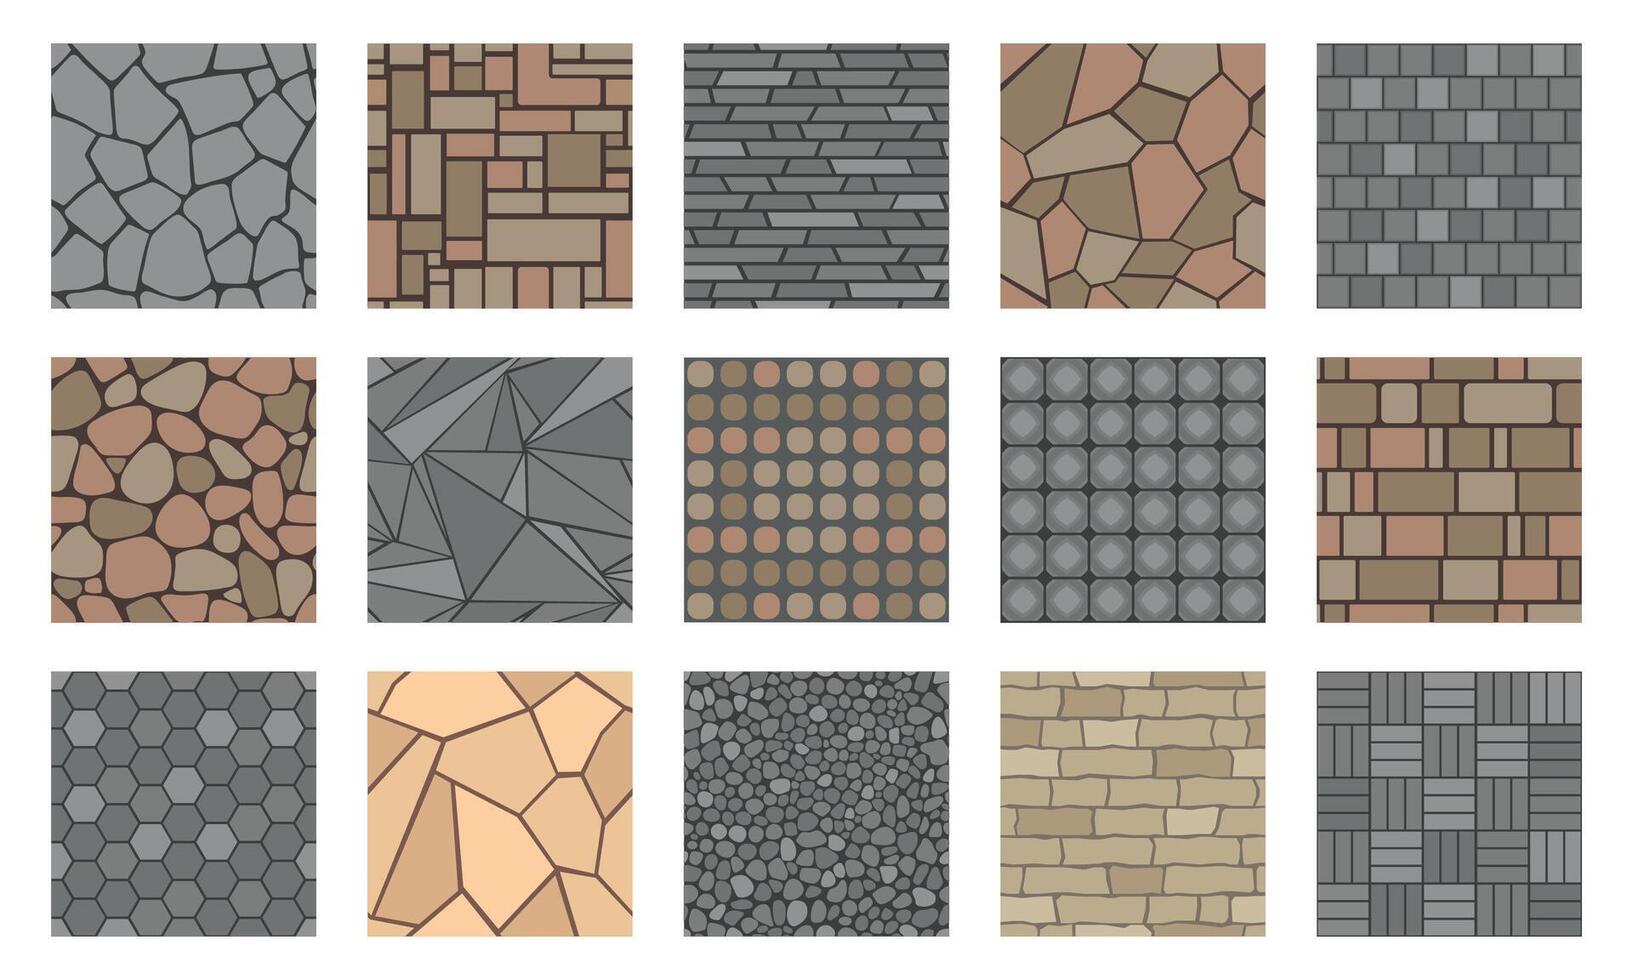 Pavement stones. Street cobblestone tile path, sidewalk and garden patio floor texture, outdoor concrete alley. Vector park road paving plan